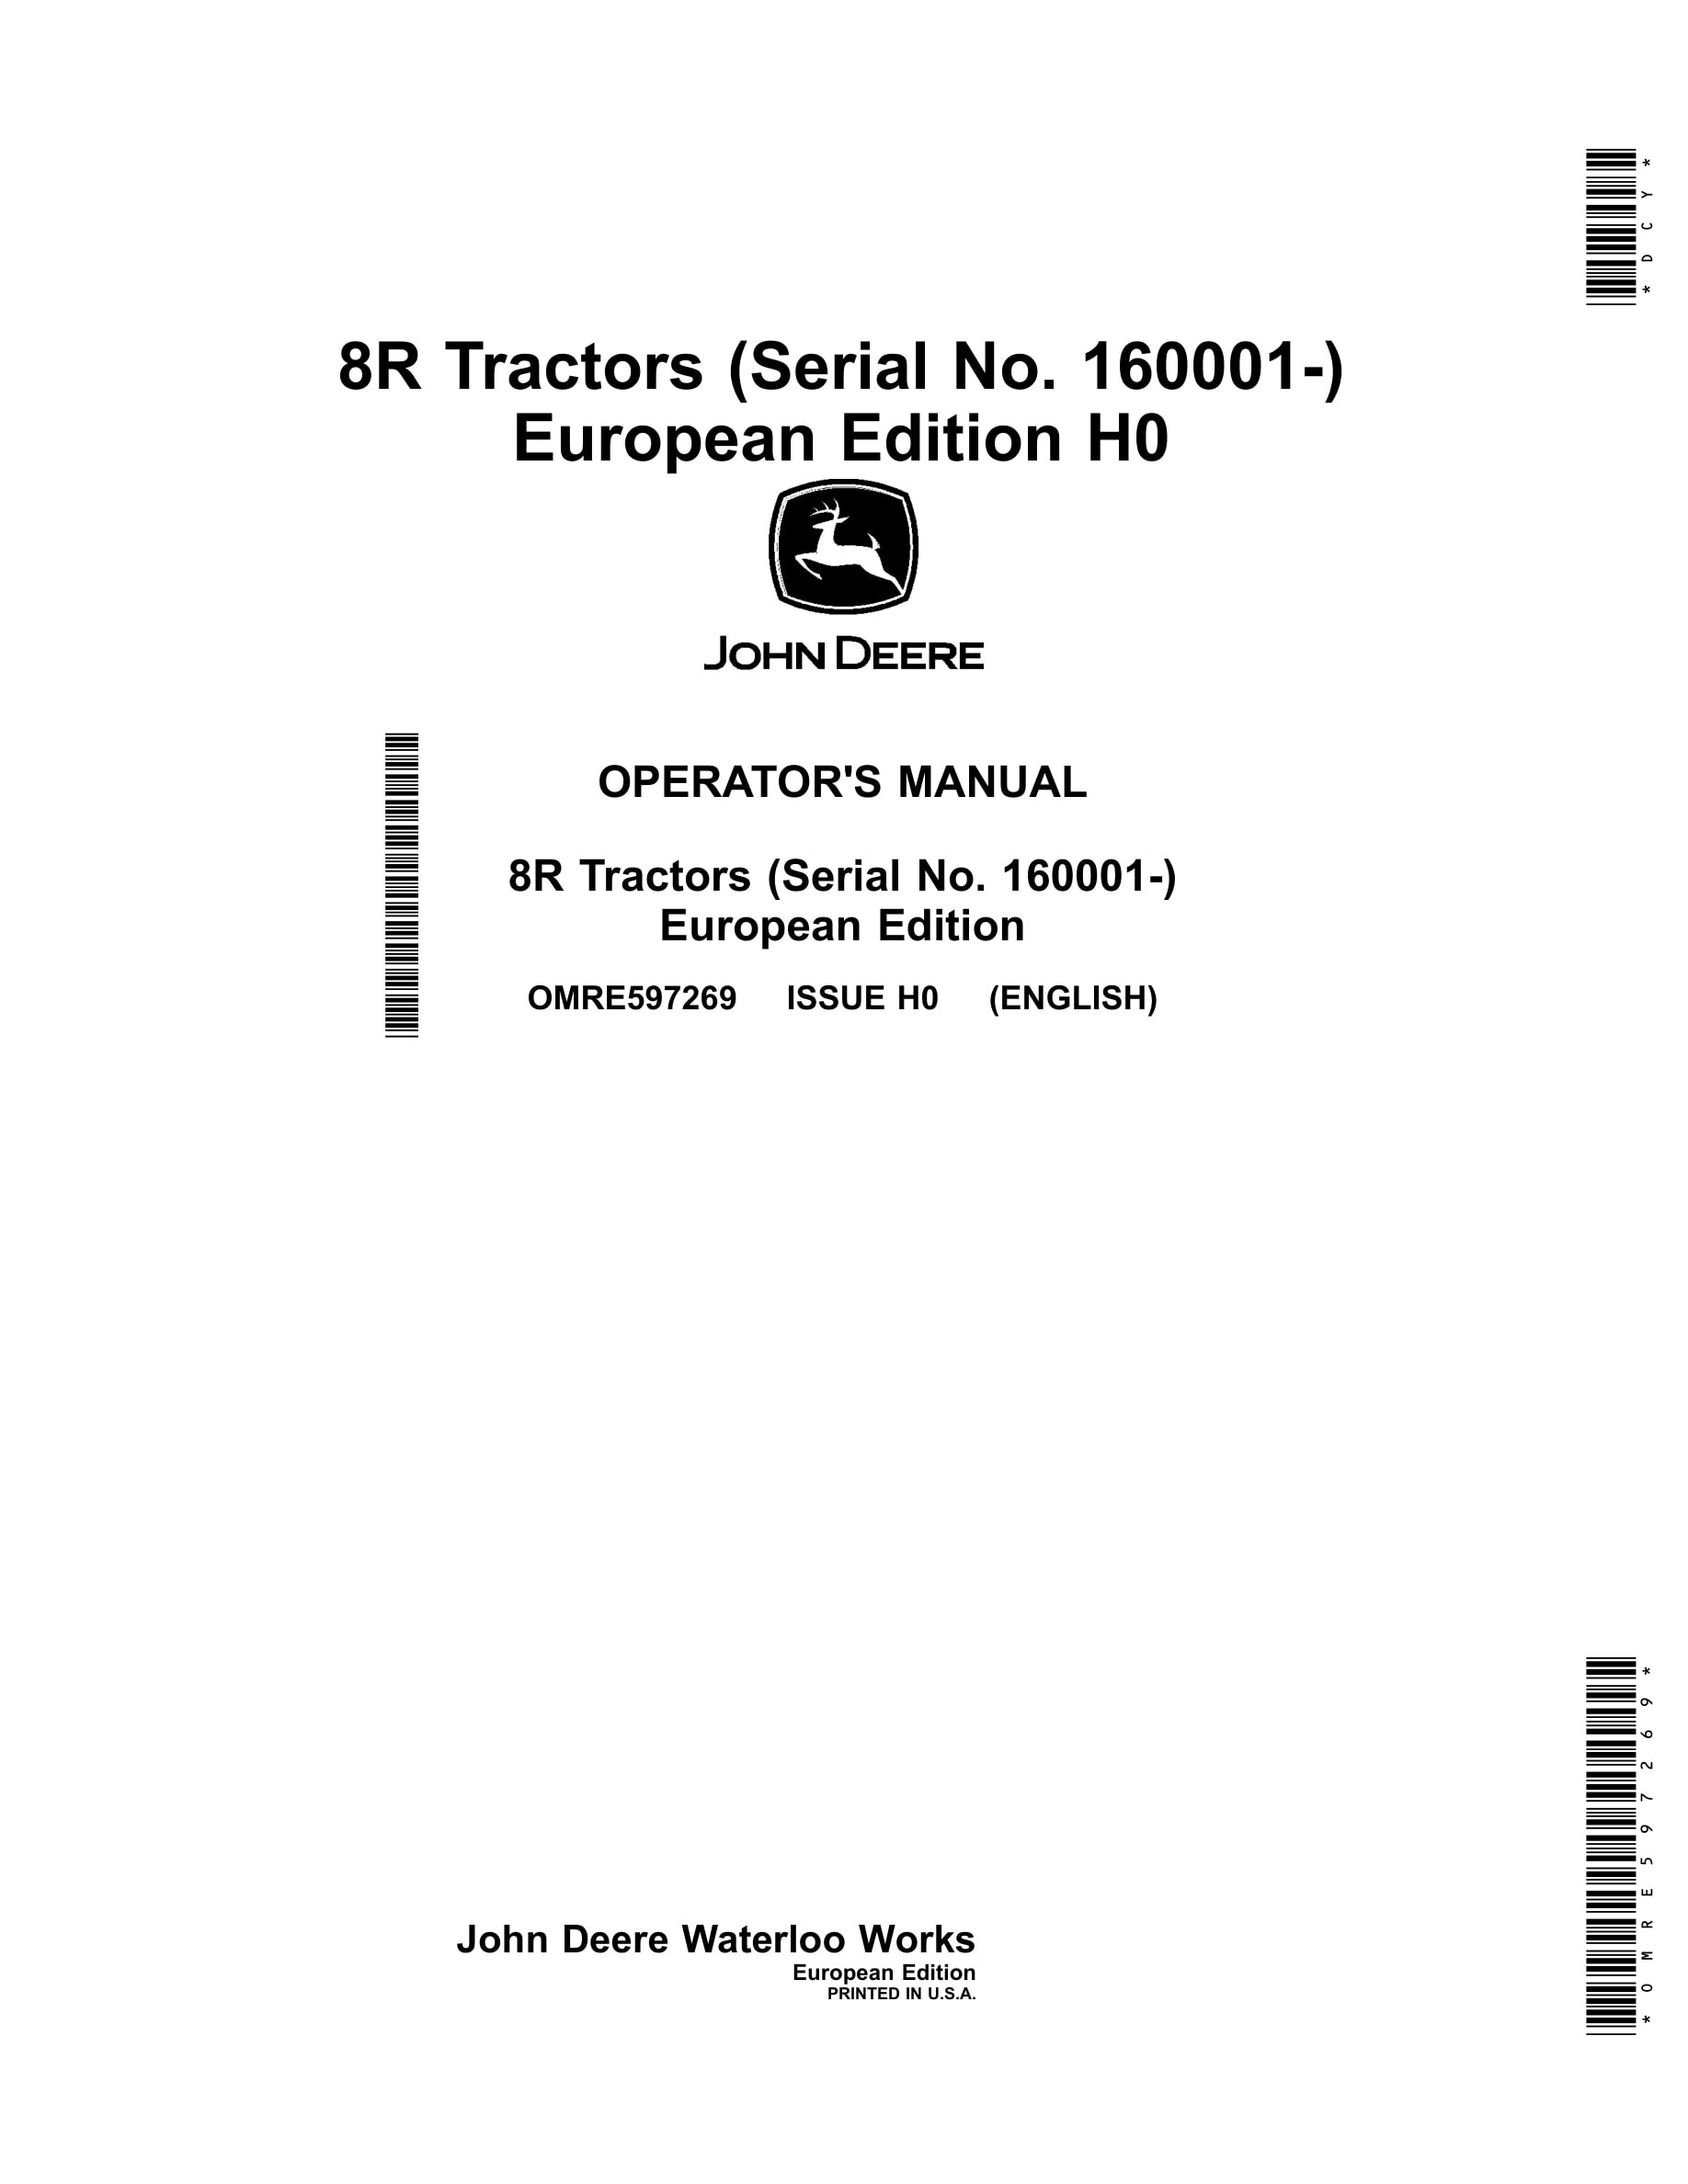 John Deere 8r Tractors Operator Manuals OMRE597269-1